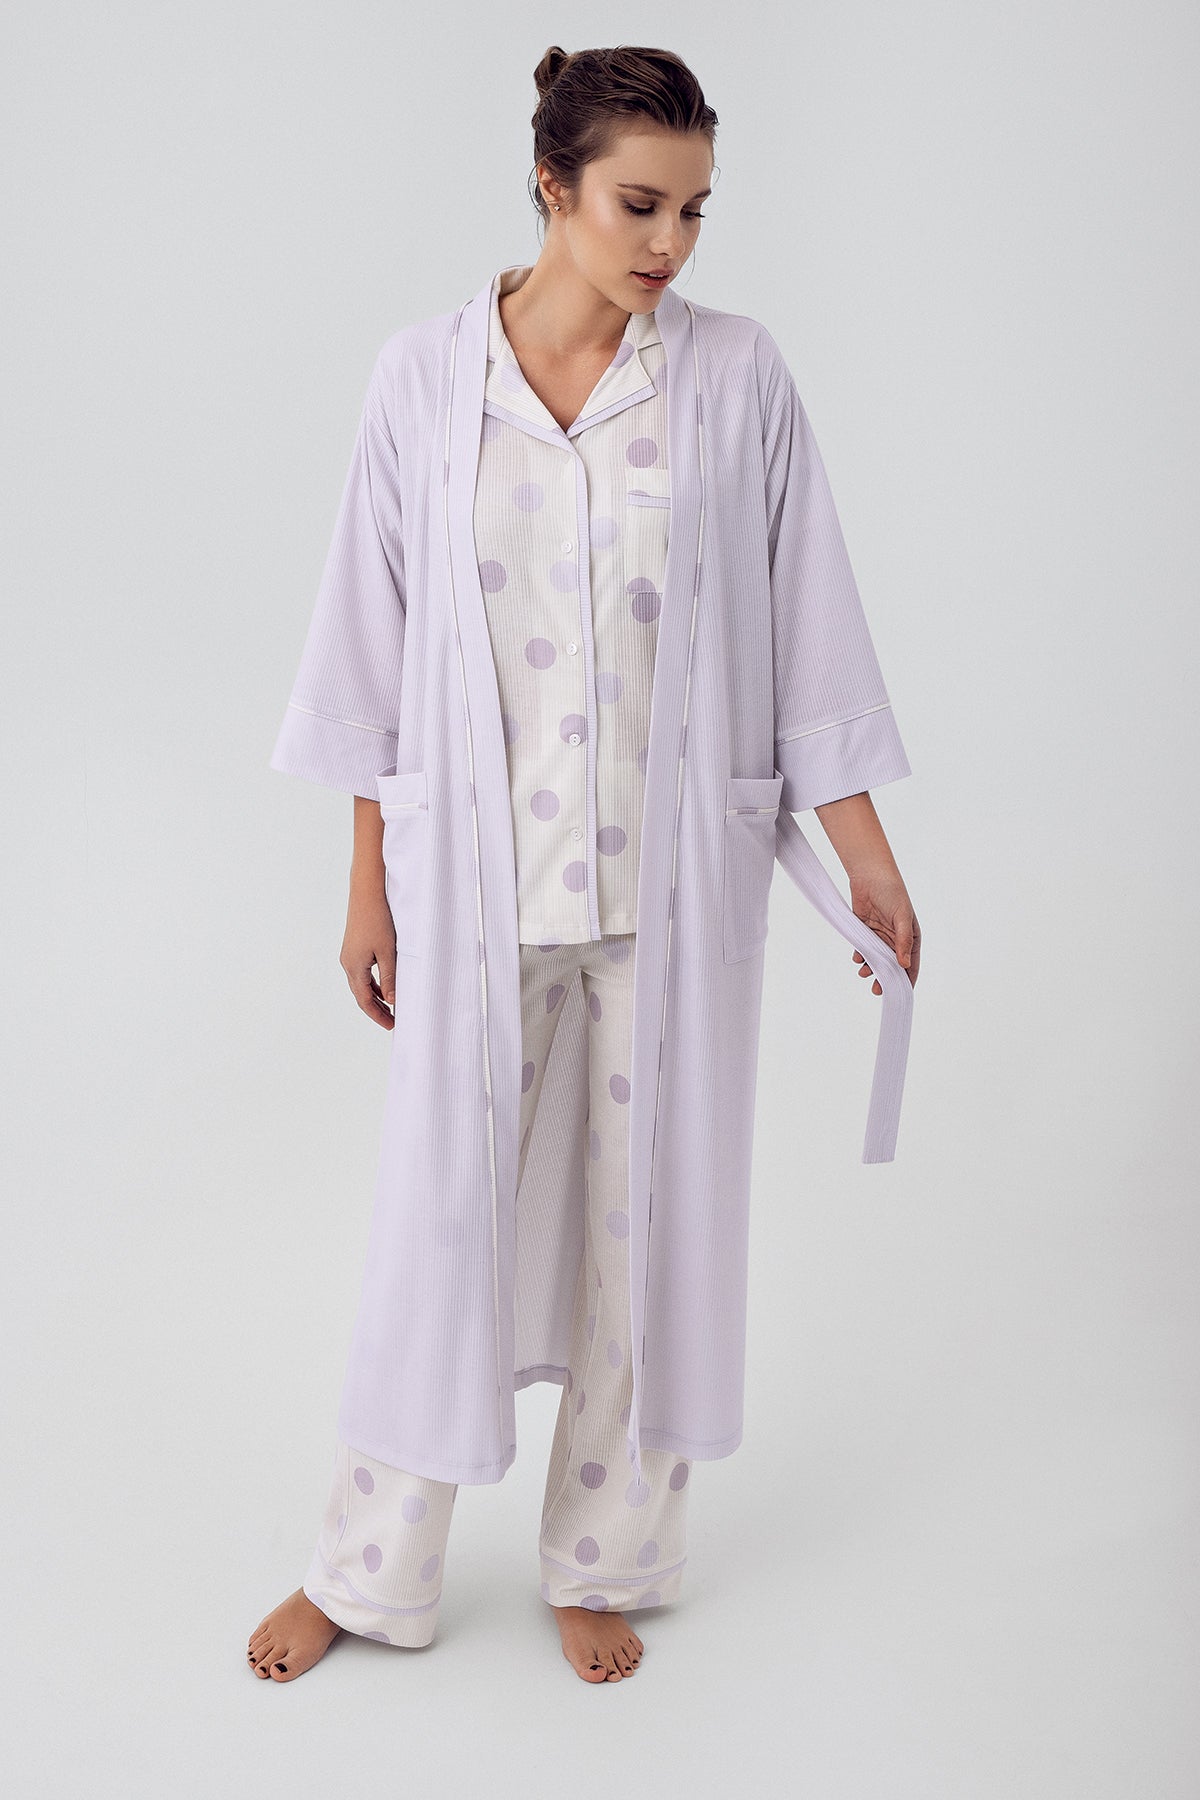 Shopymommy 16310 Polka Dot 3-Pieces Maternity & Nursing Pajamas With Robe Lilac